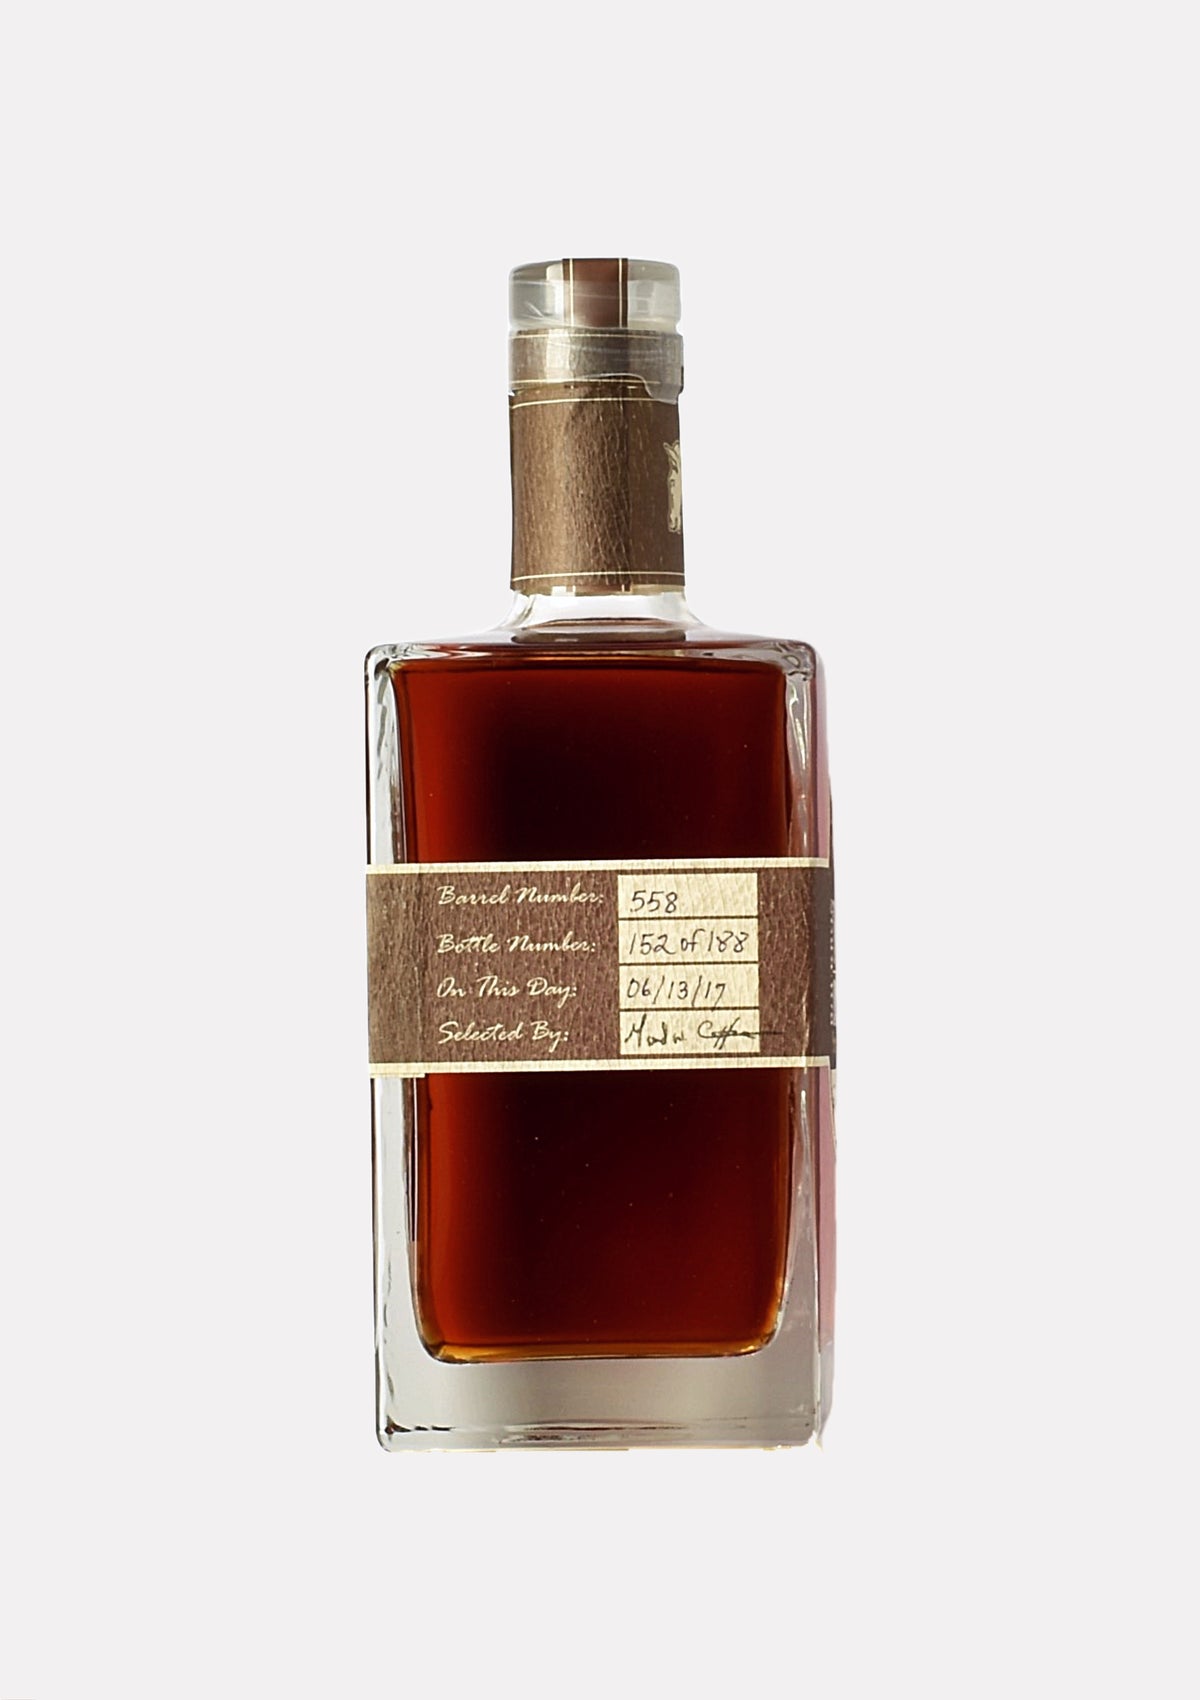 Town Branch Single Barrel Kentucky Straight Bourbon Whiskey 124.203 Proof